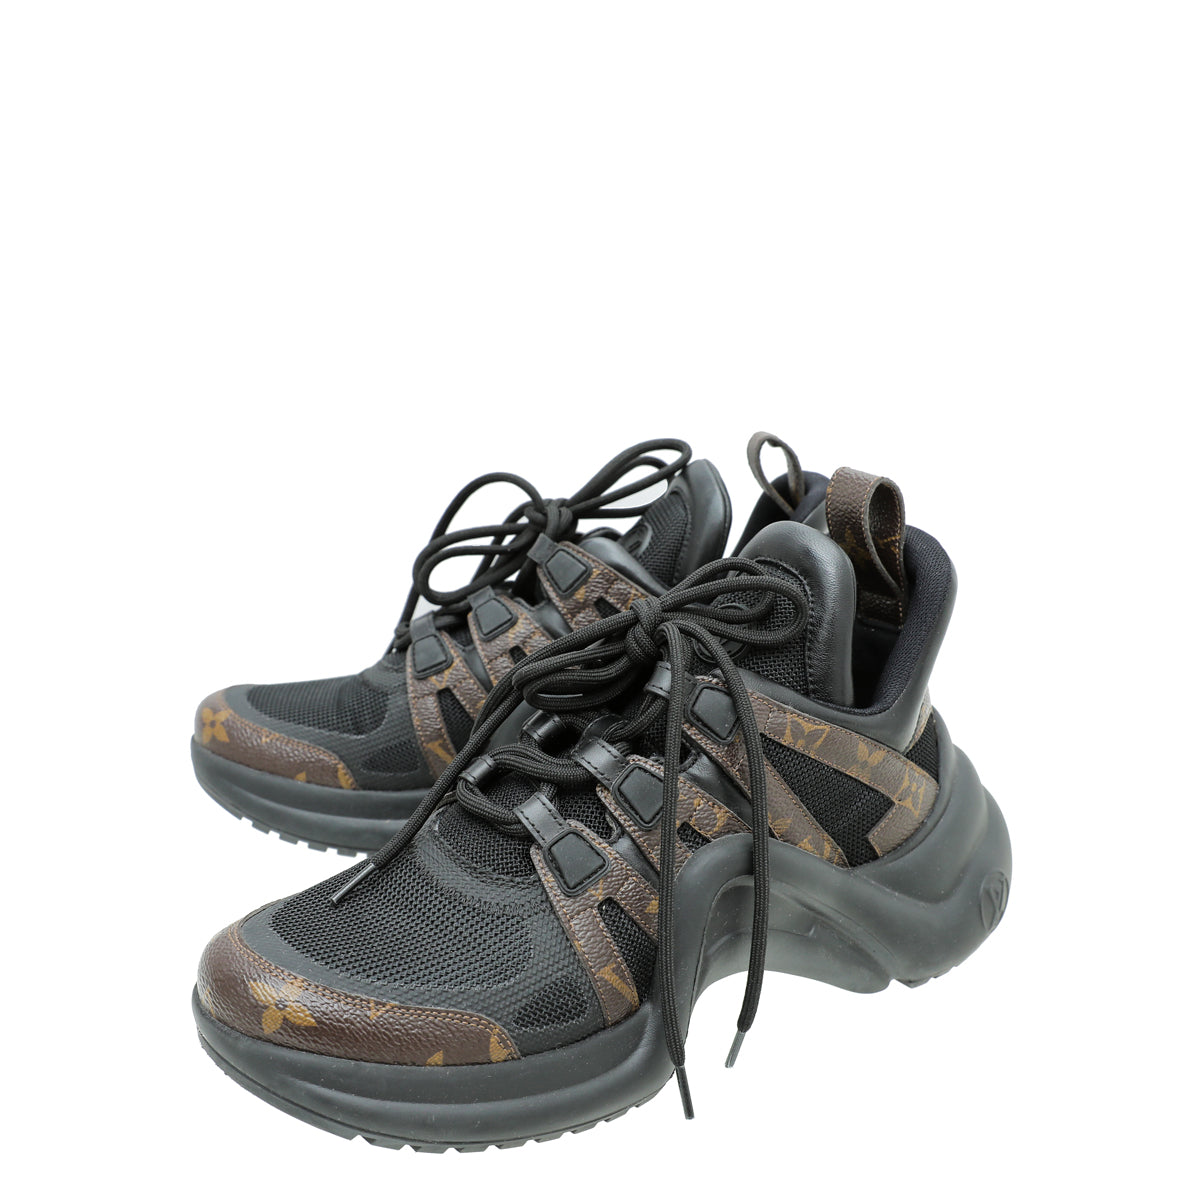 LOUIS VUITTON Calfskin Metallic Monogram LV Archlight Sneakers 37